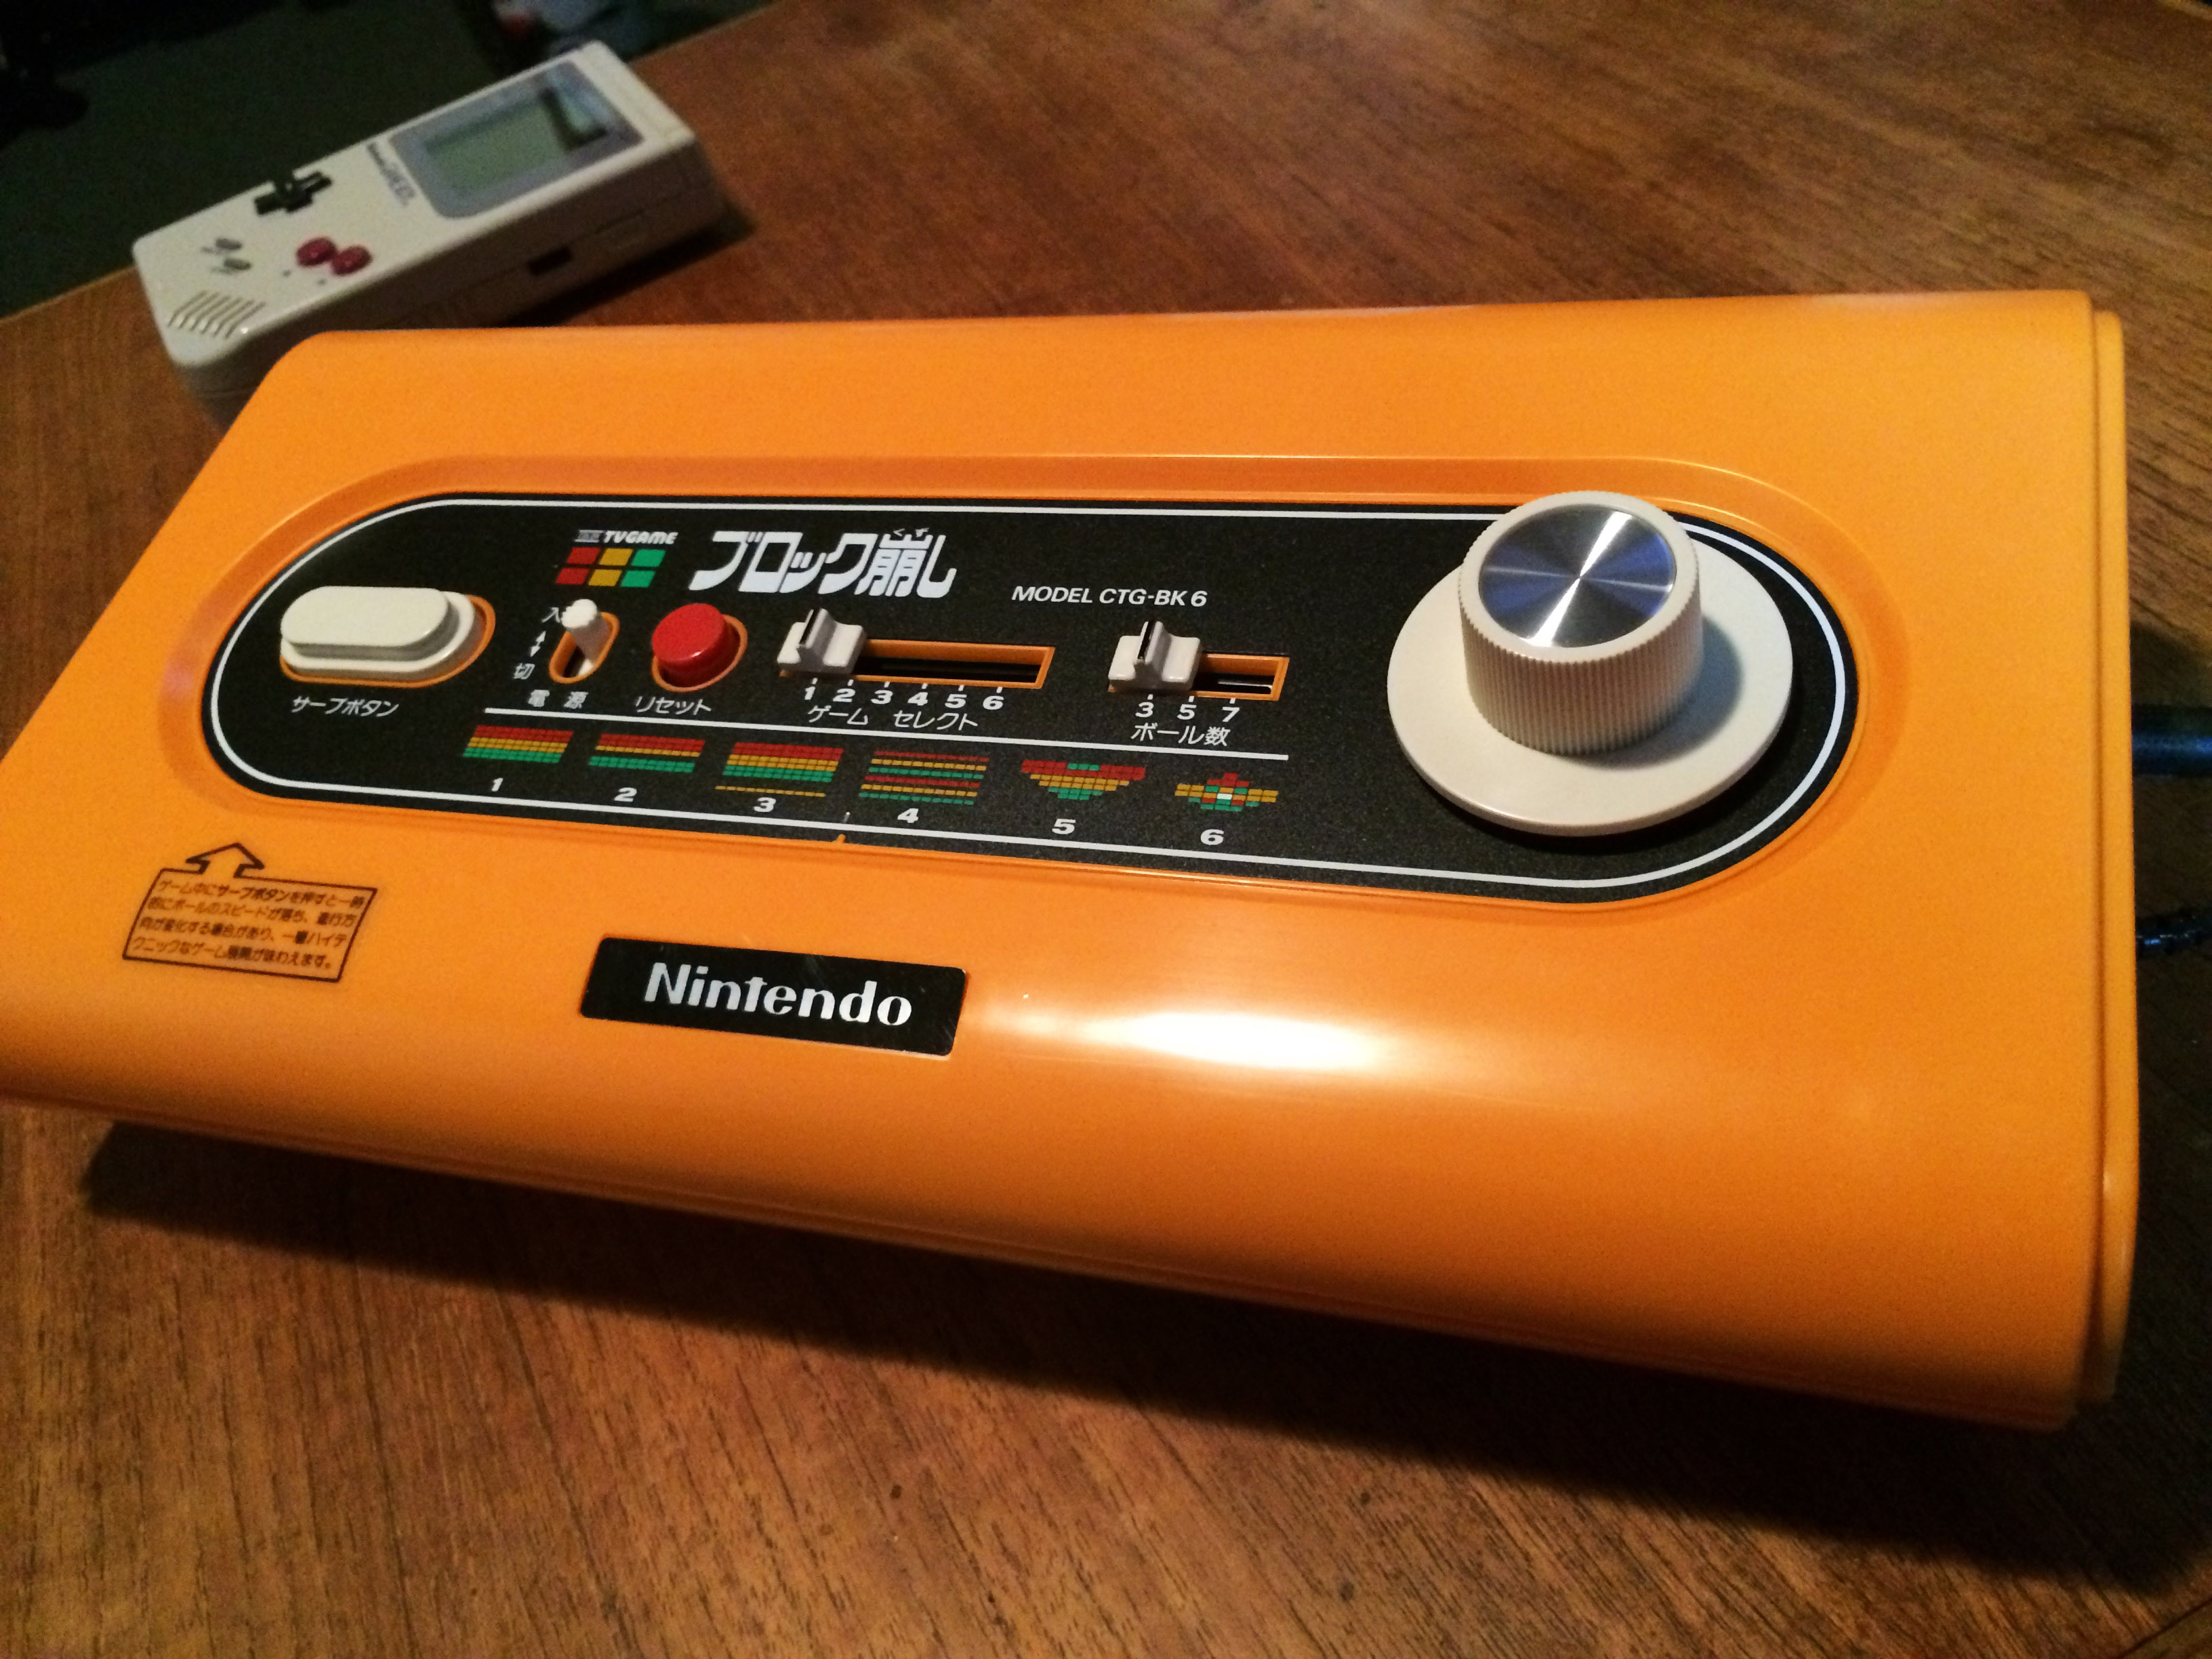 Nintendo блок. Первая консоль Нинтендо 1979. Nintendo Color TV game. Color TV game Block Kuzushi.